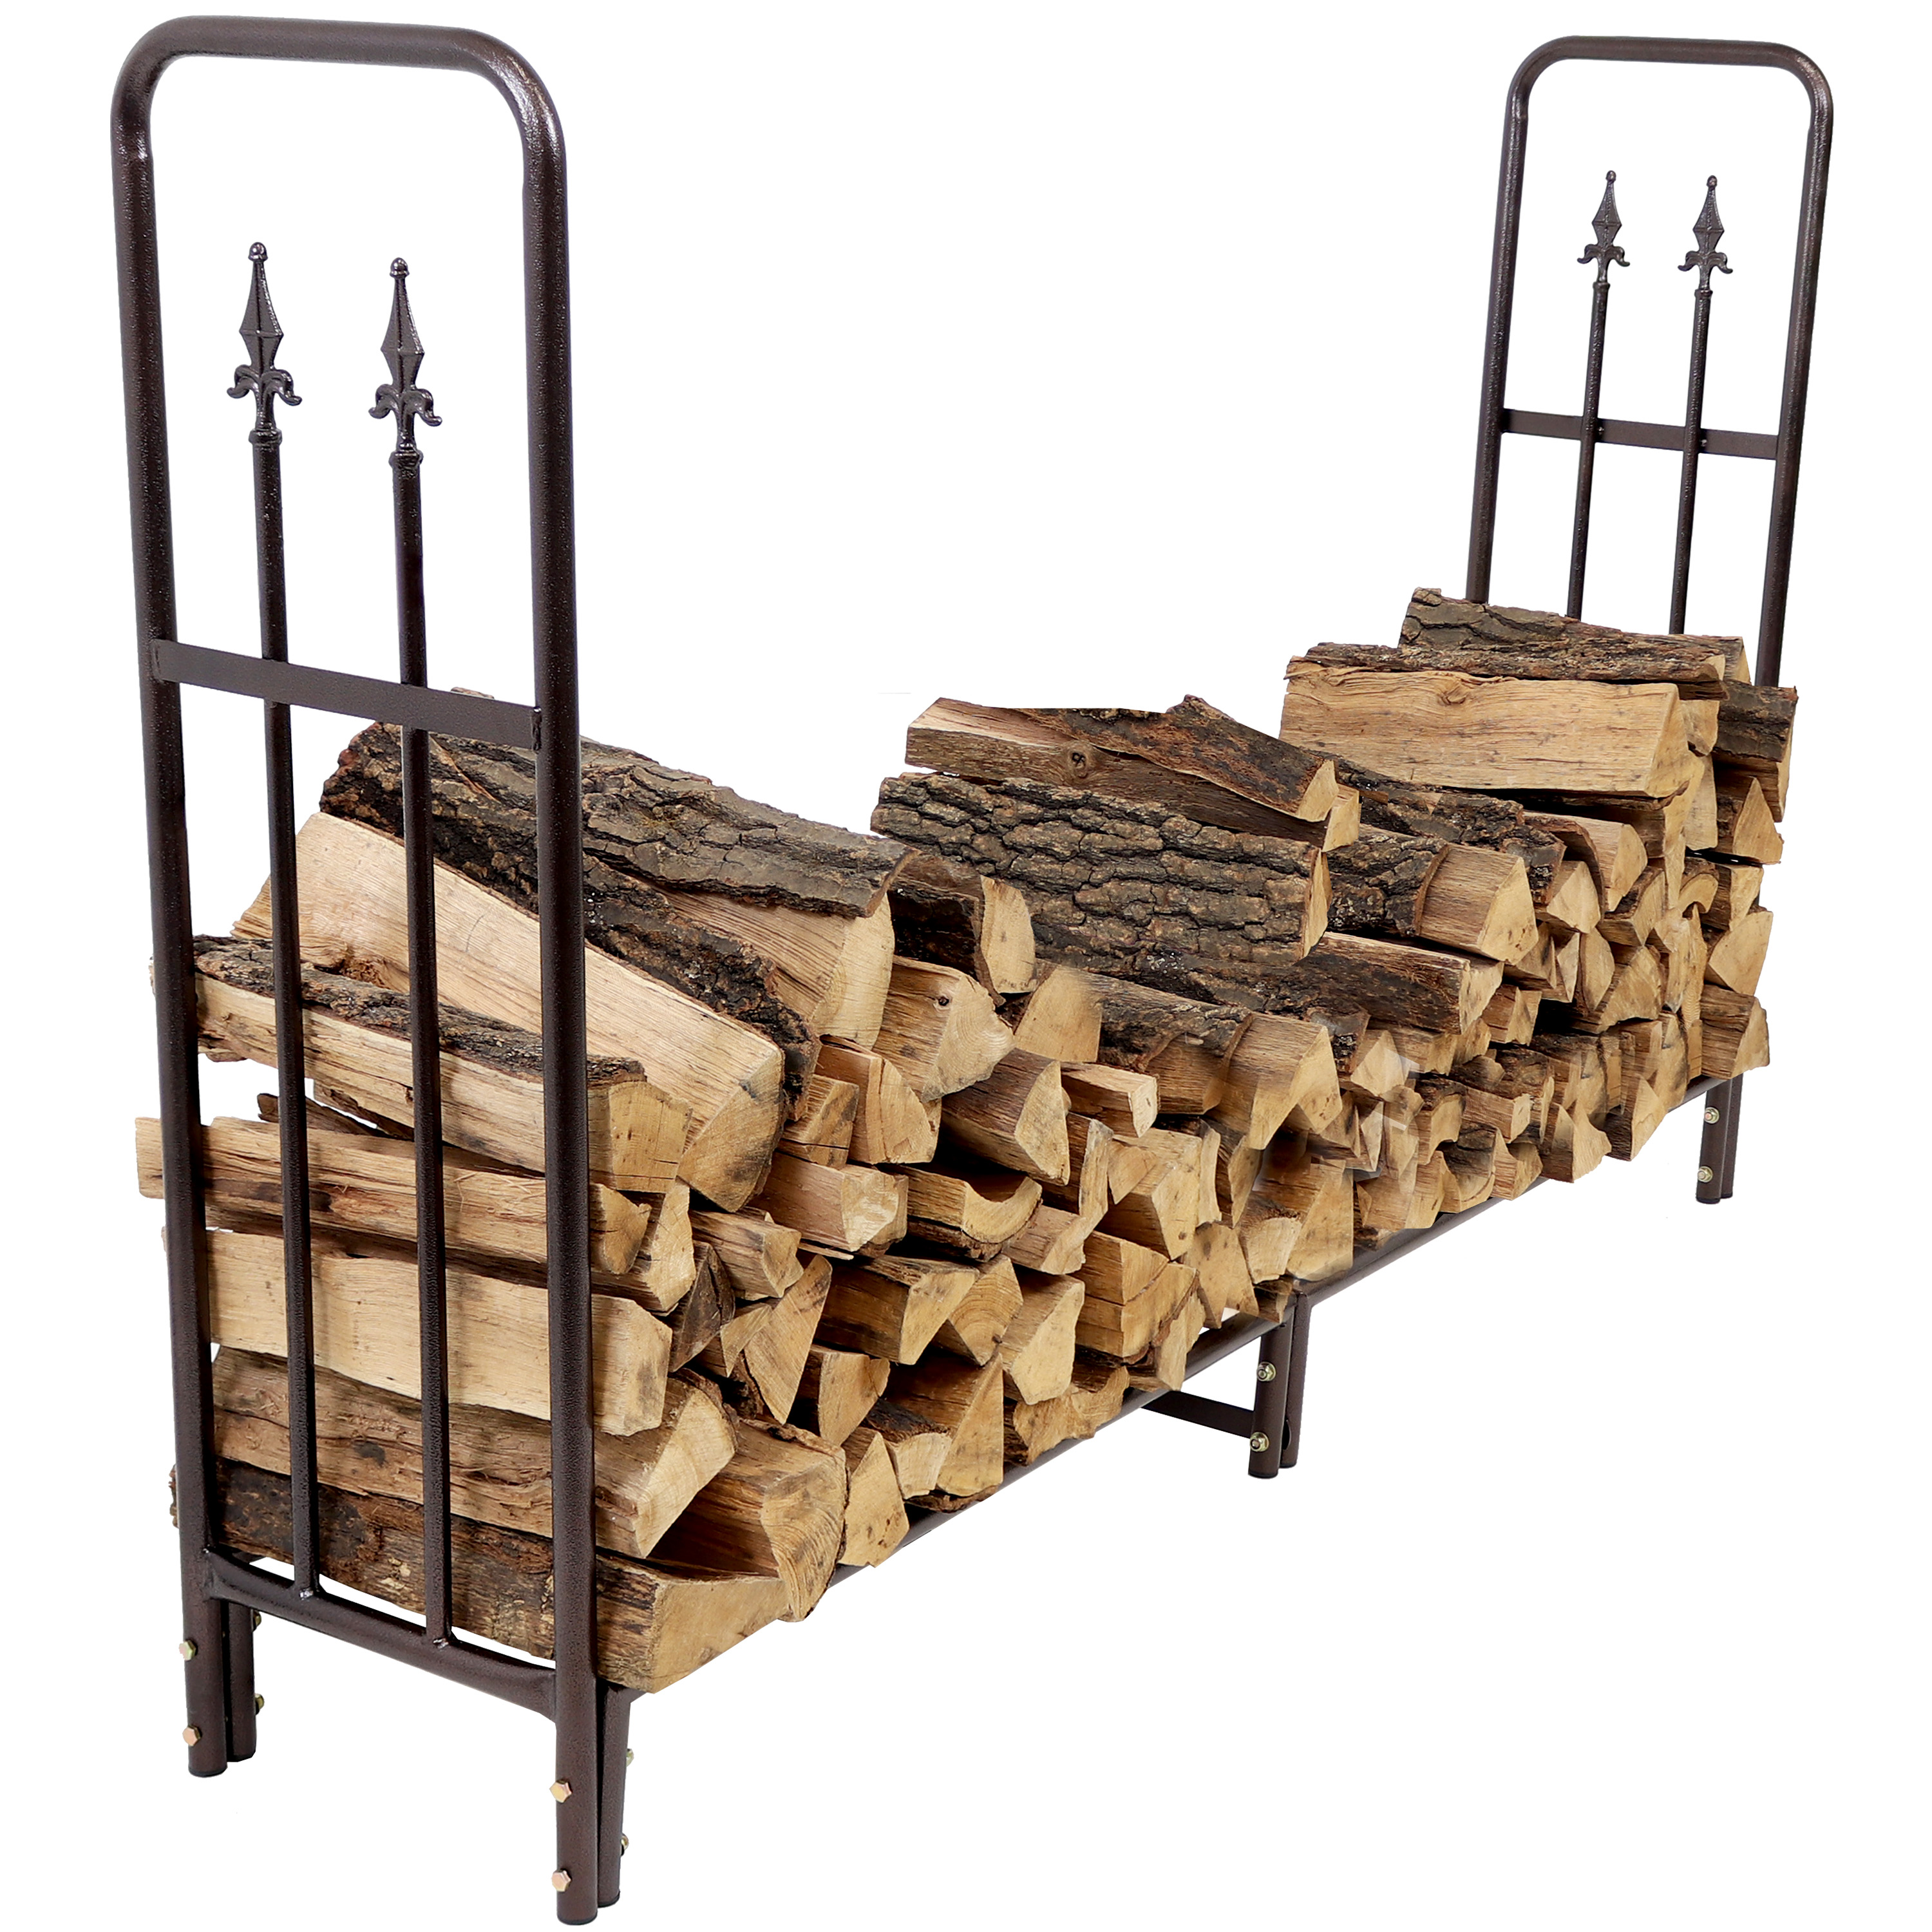 Sunnydaze Bronze Decorative Firewood Log Rack, 6-Foot